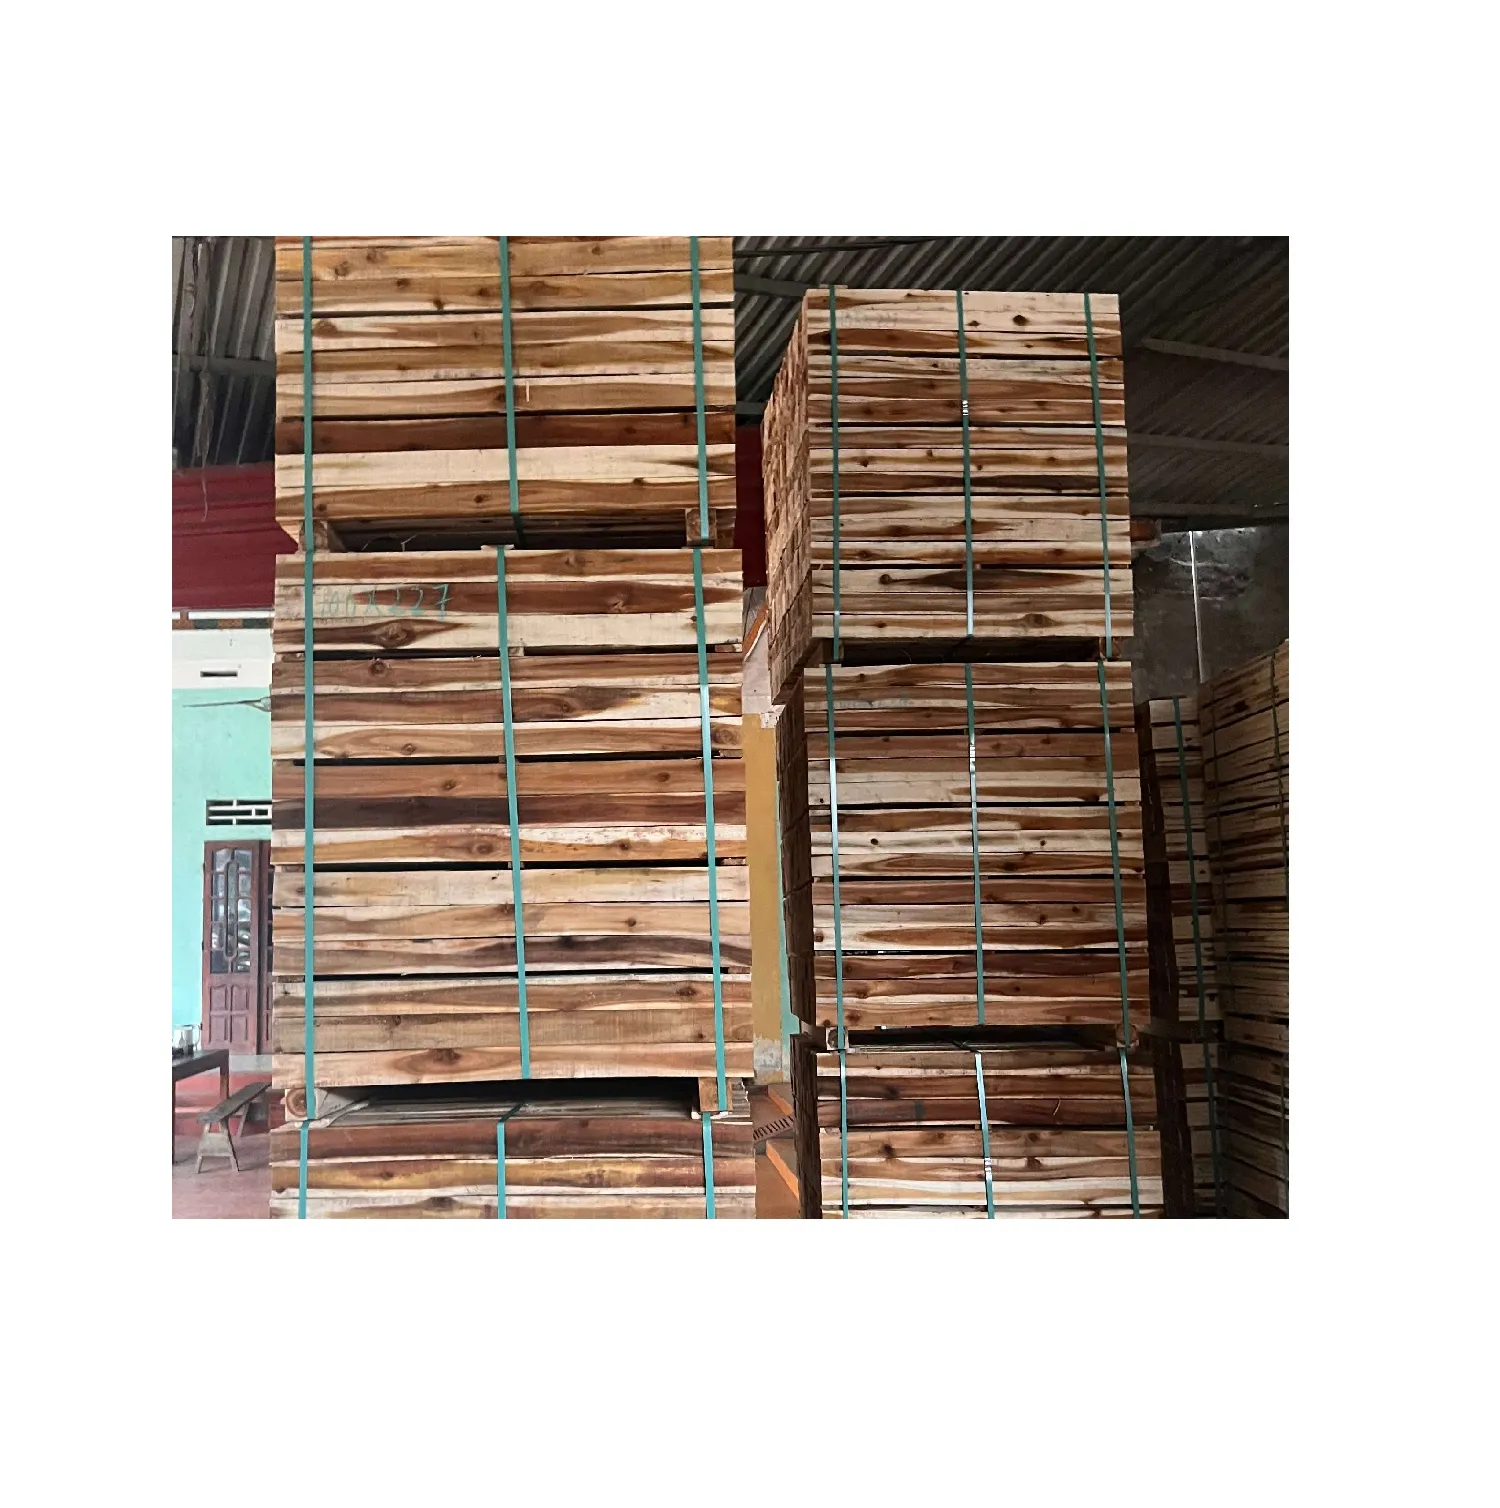 Whosale sawn timber - High Quality Teak Sawn Timber, Teak Wood, Teak Timber Various - Ready To Export From Vietnam